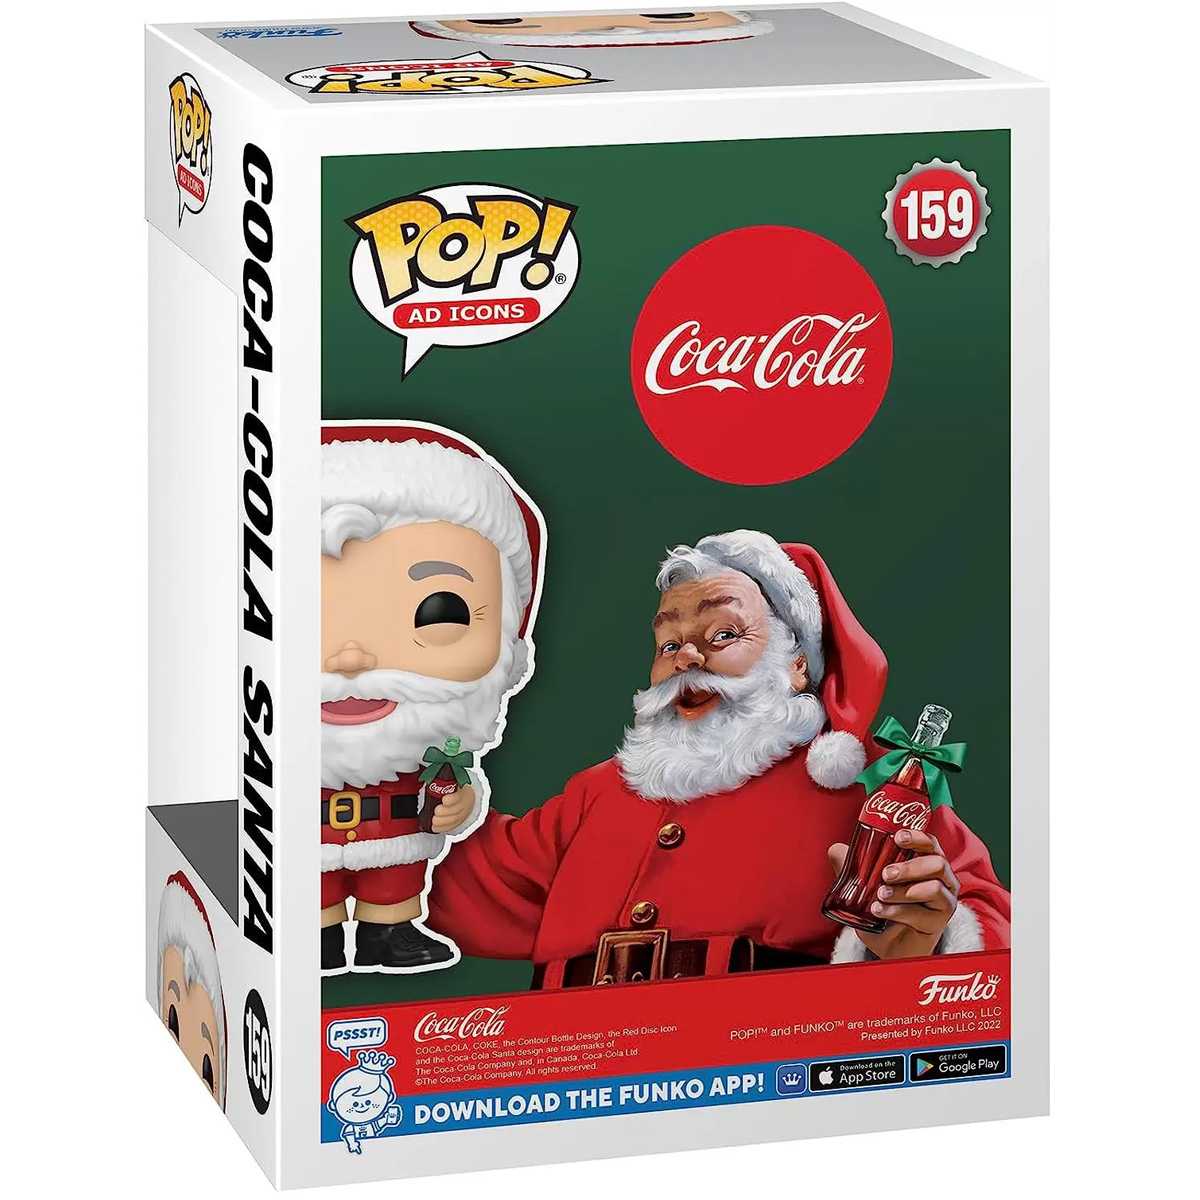 Coca-Cola Santa # 159 - Funko Pop! Ad Icons